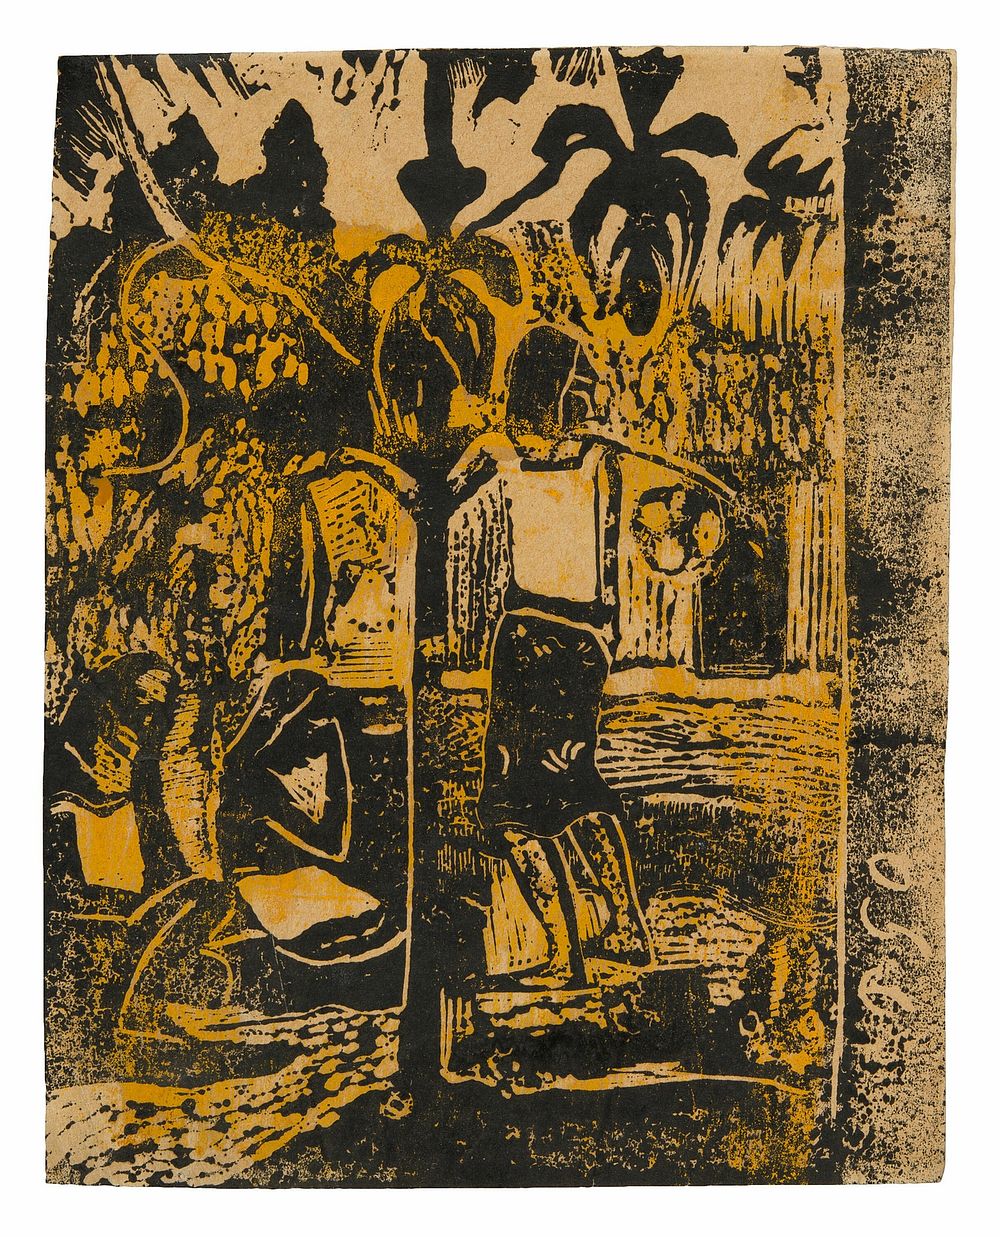 Noa noa (Fragrant) by Paul Gauguin